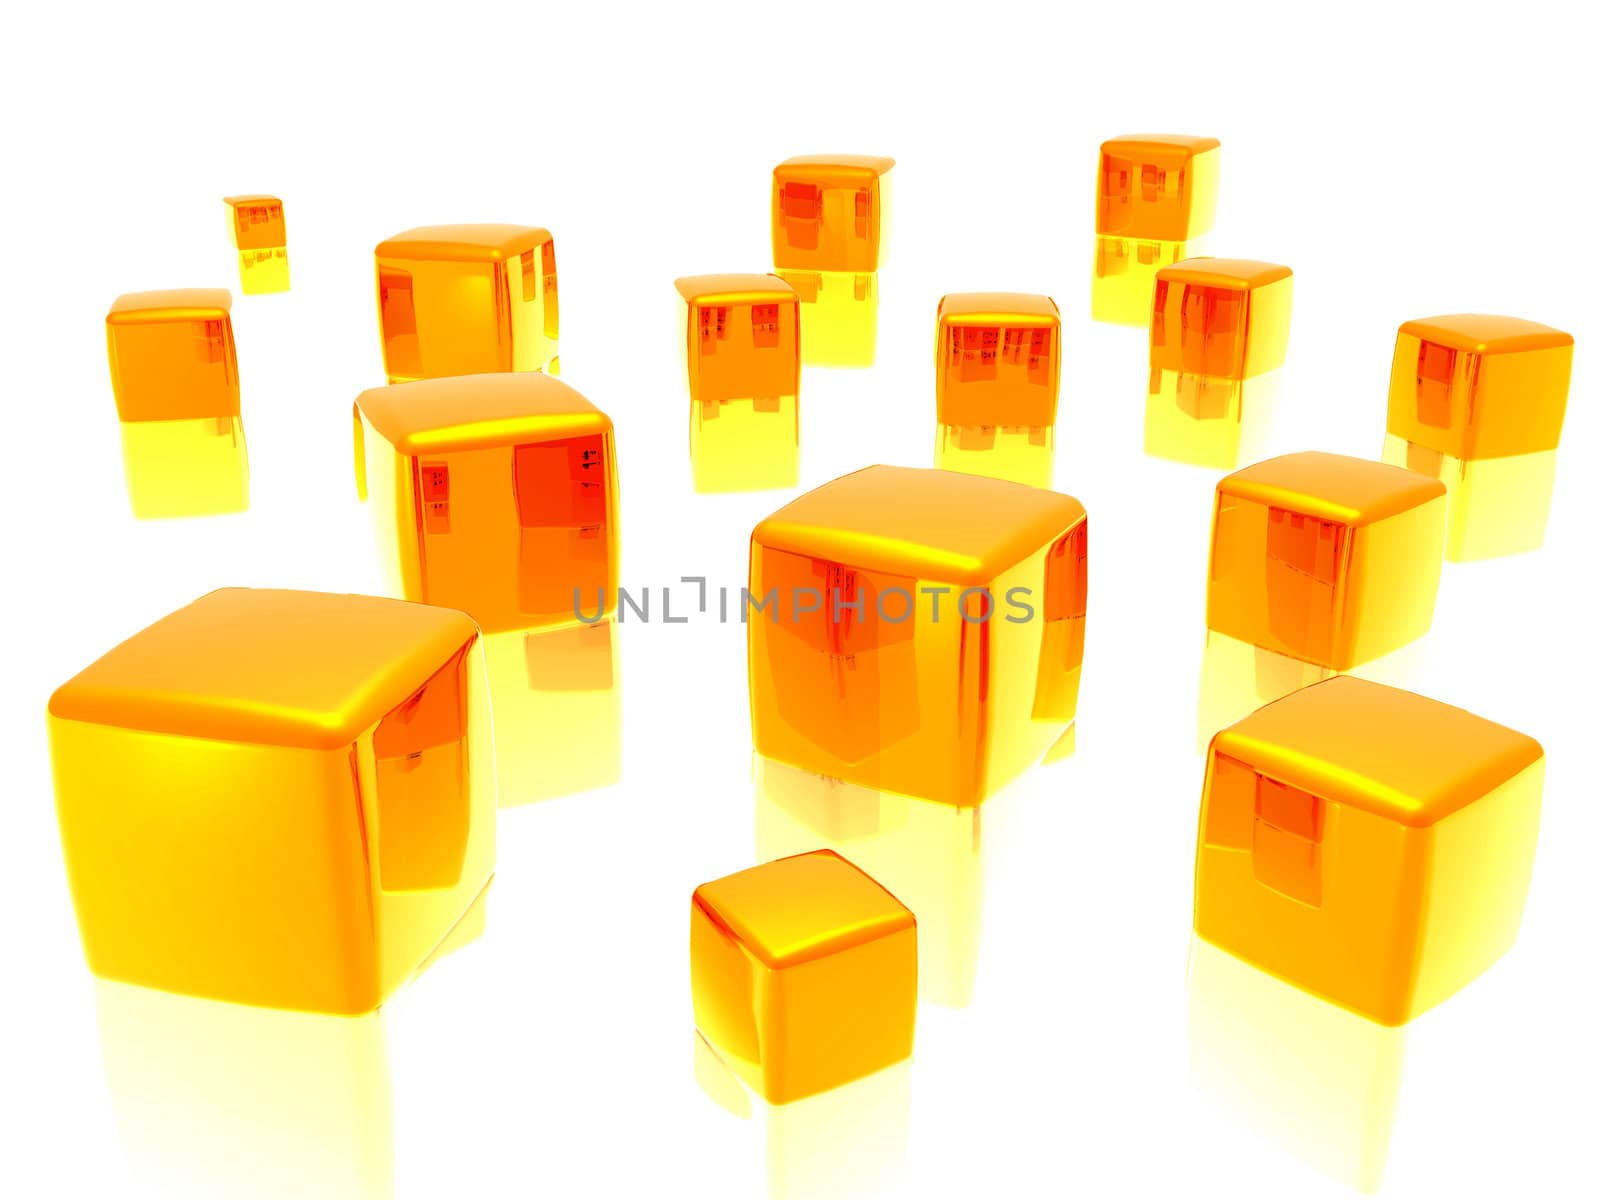 Golden cubes by MartMartov